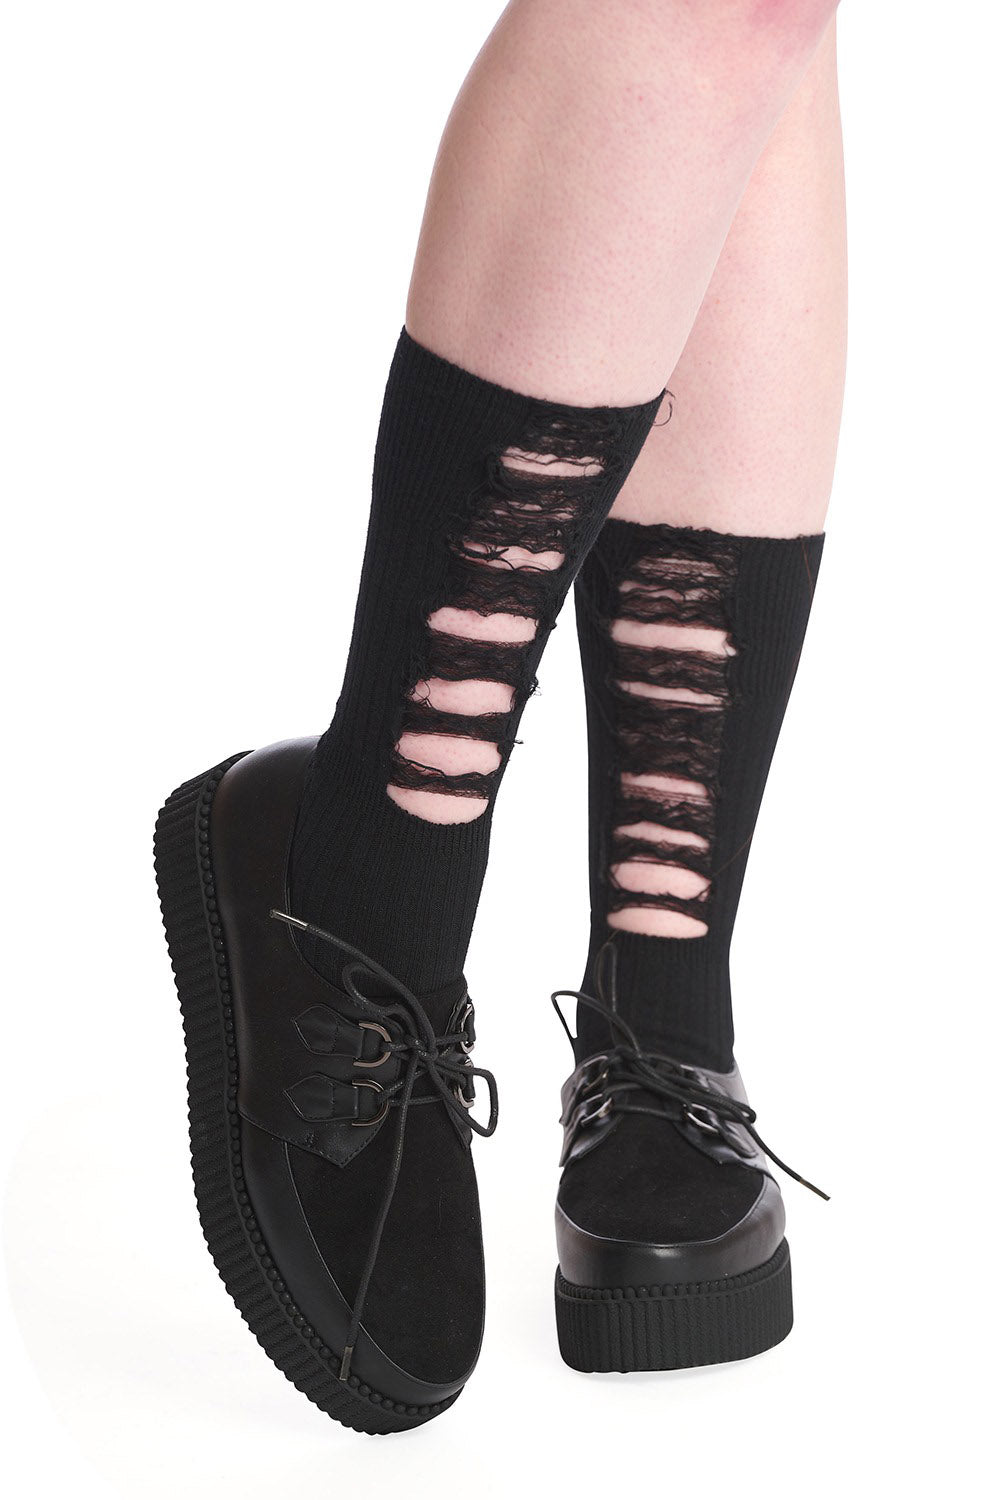 gothic distressed punk socks